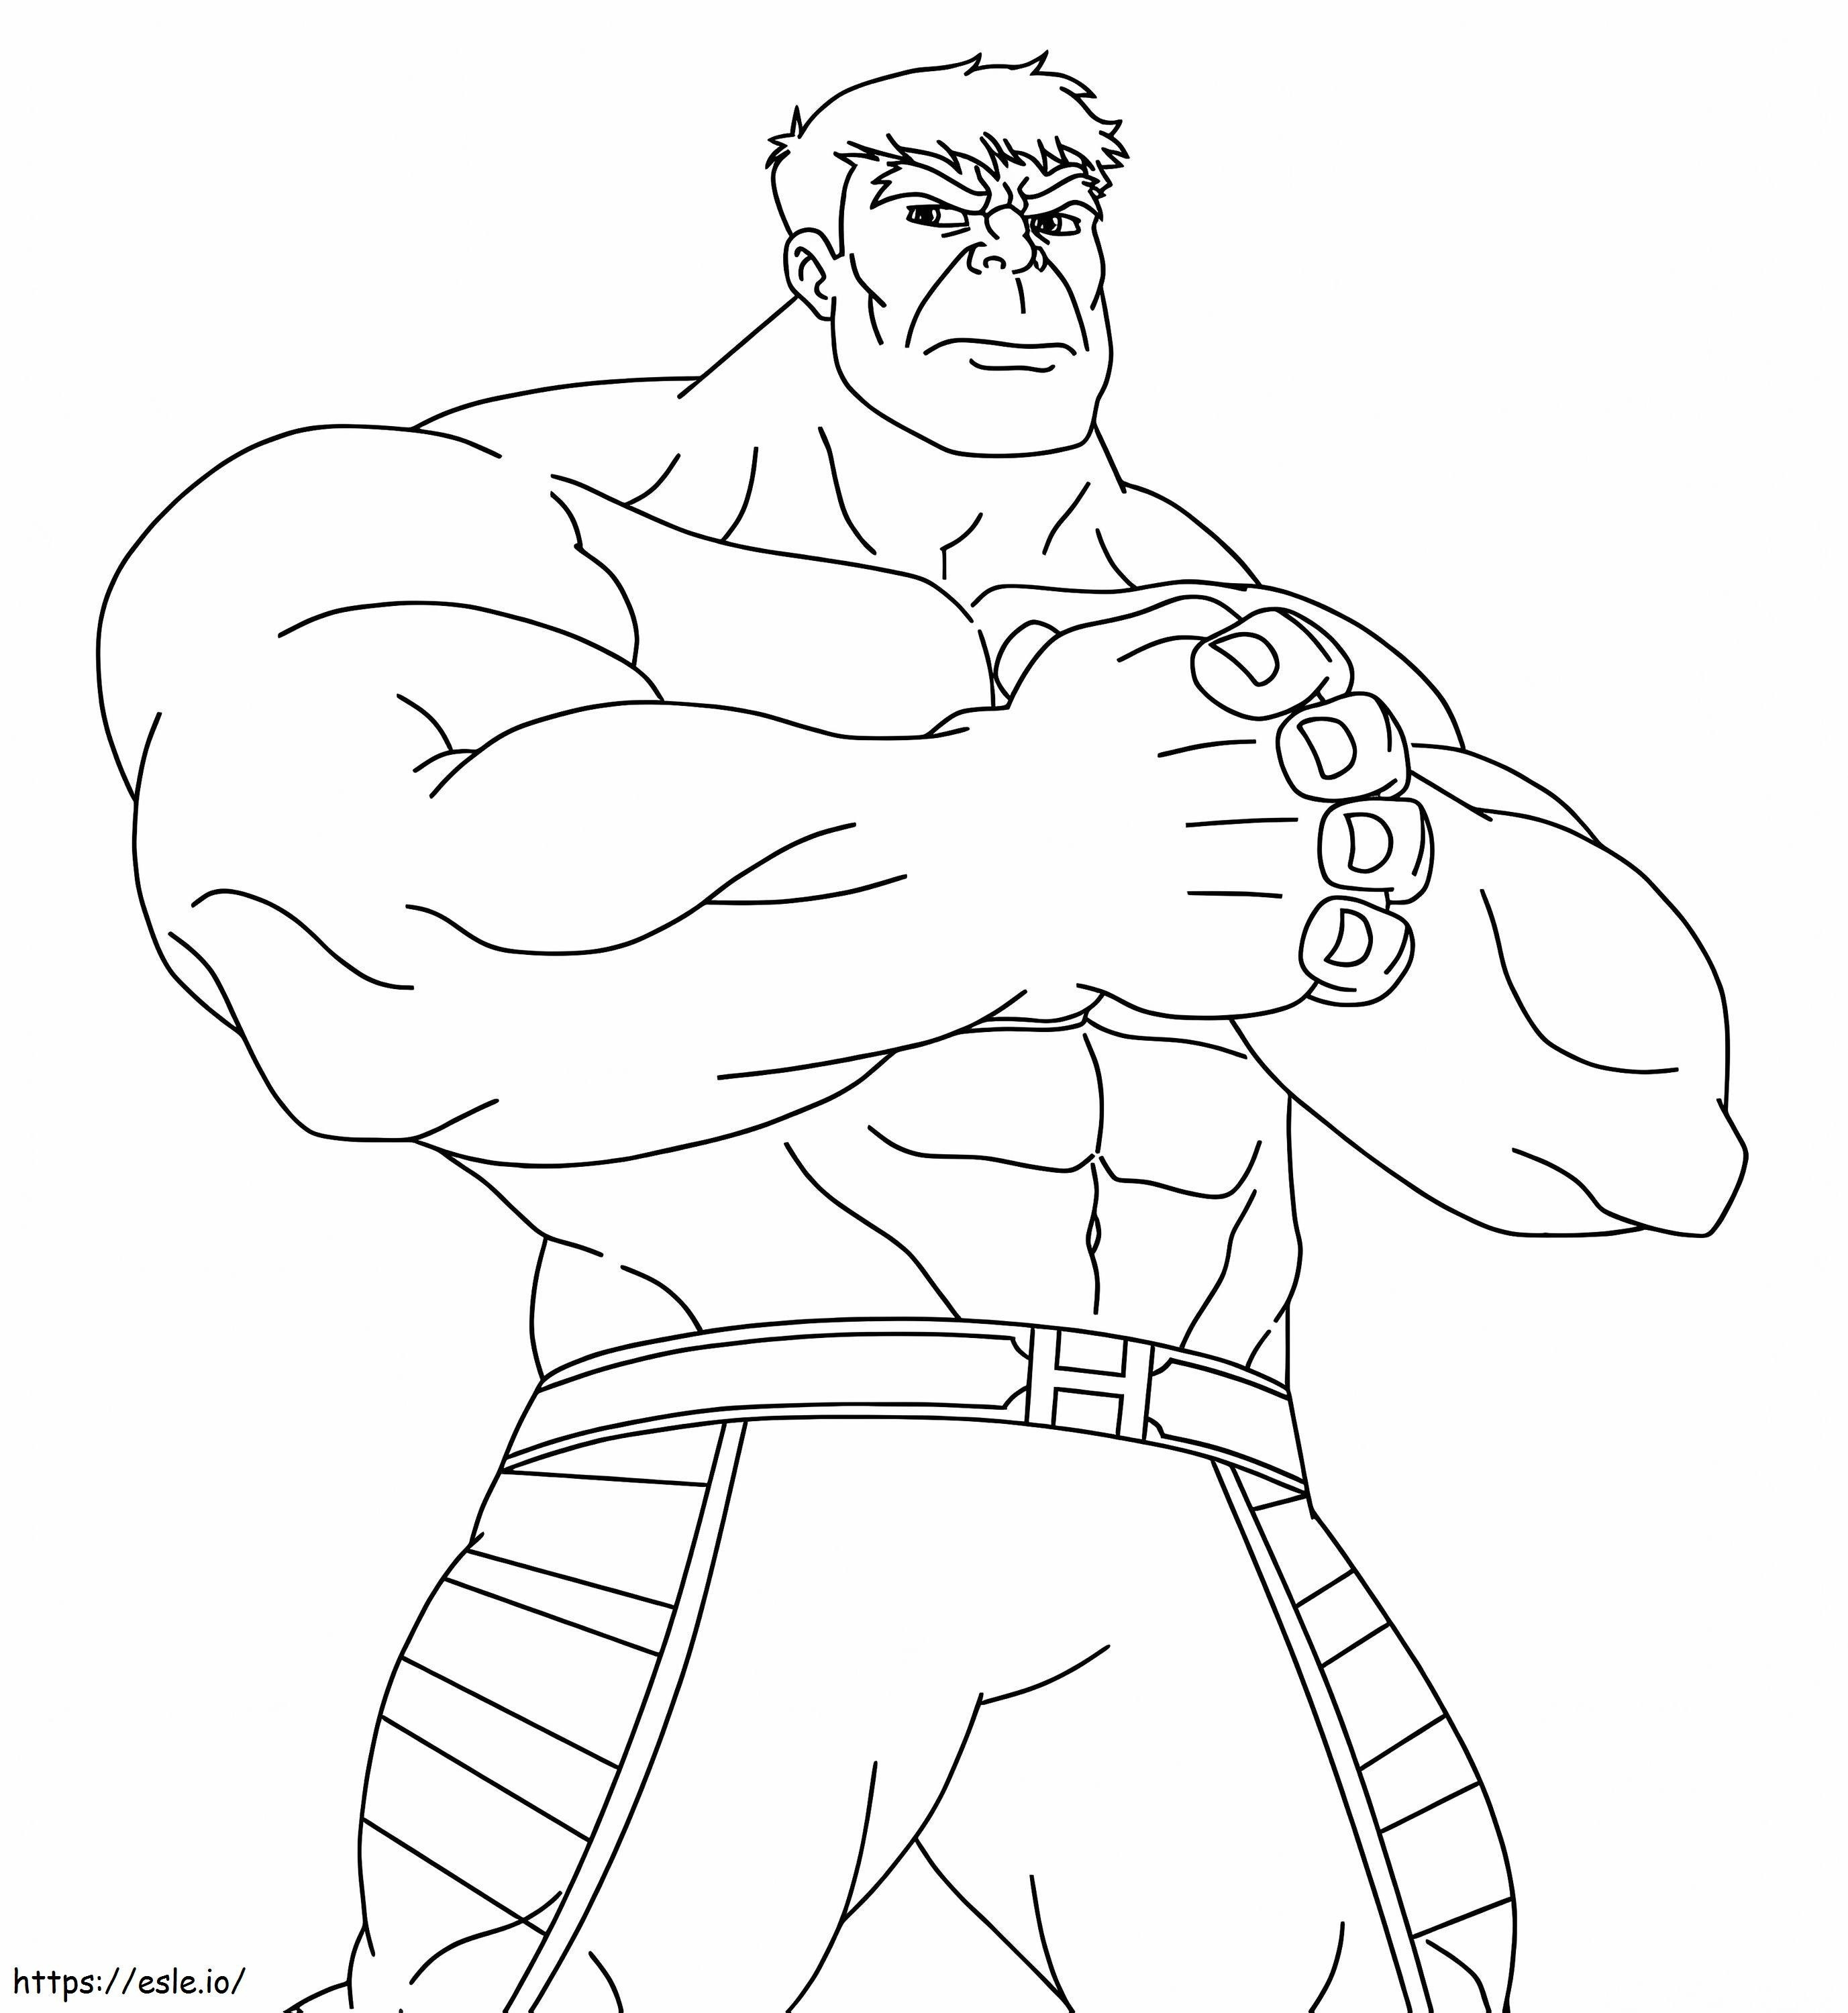 Hulk a maravilha para colorir